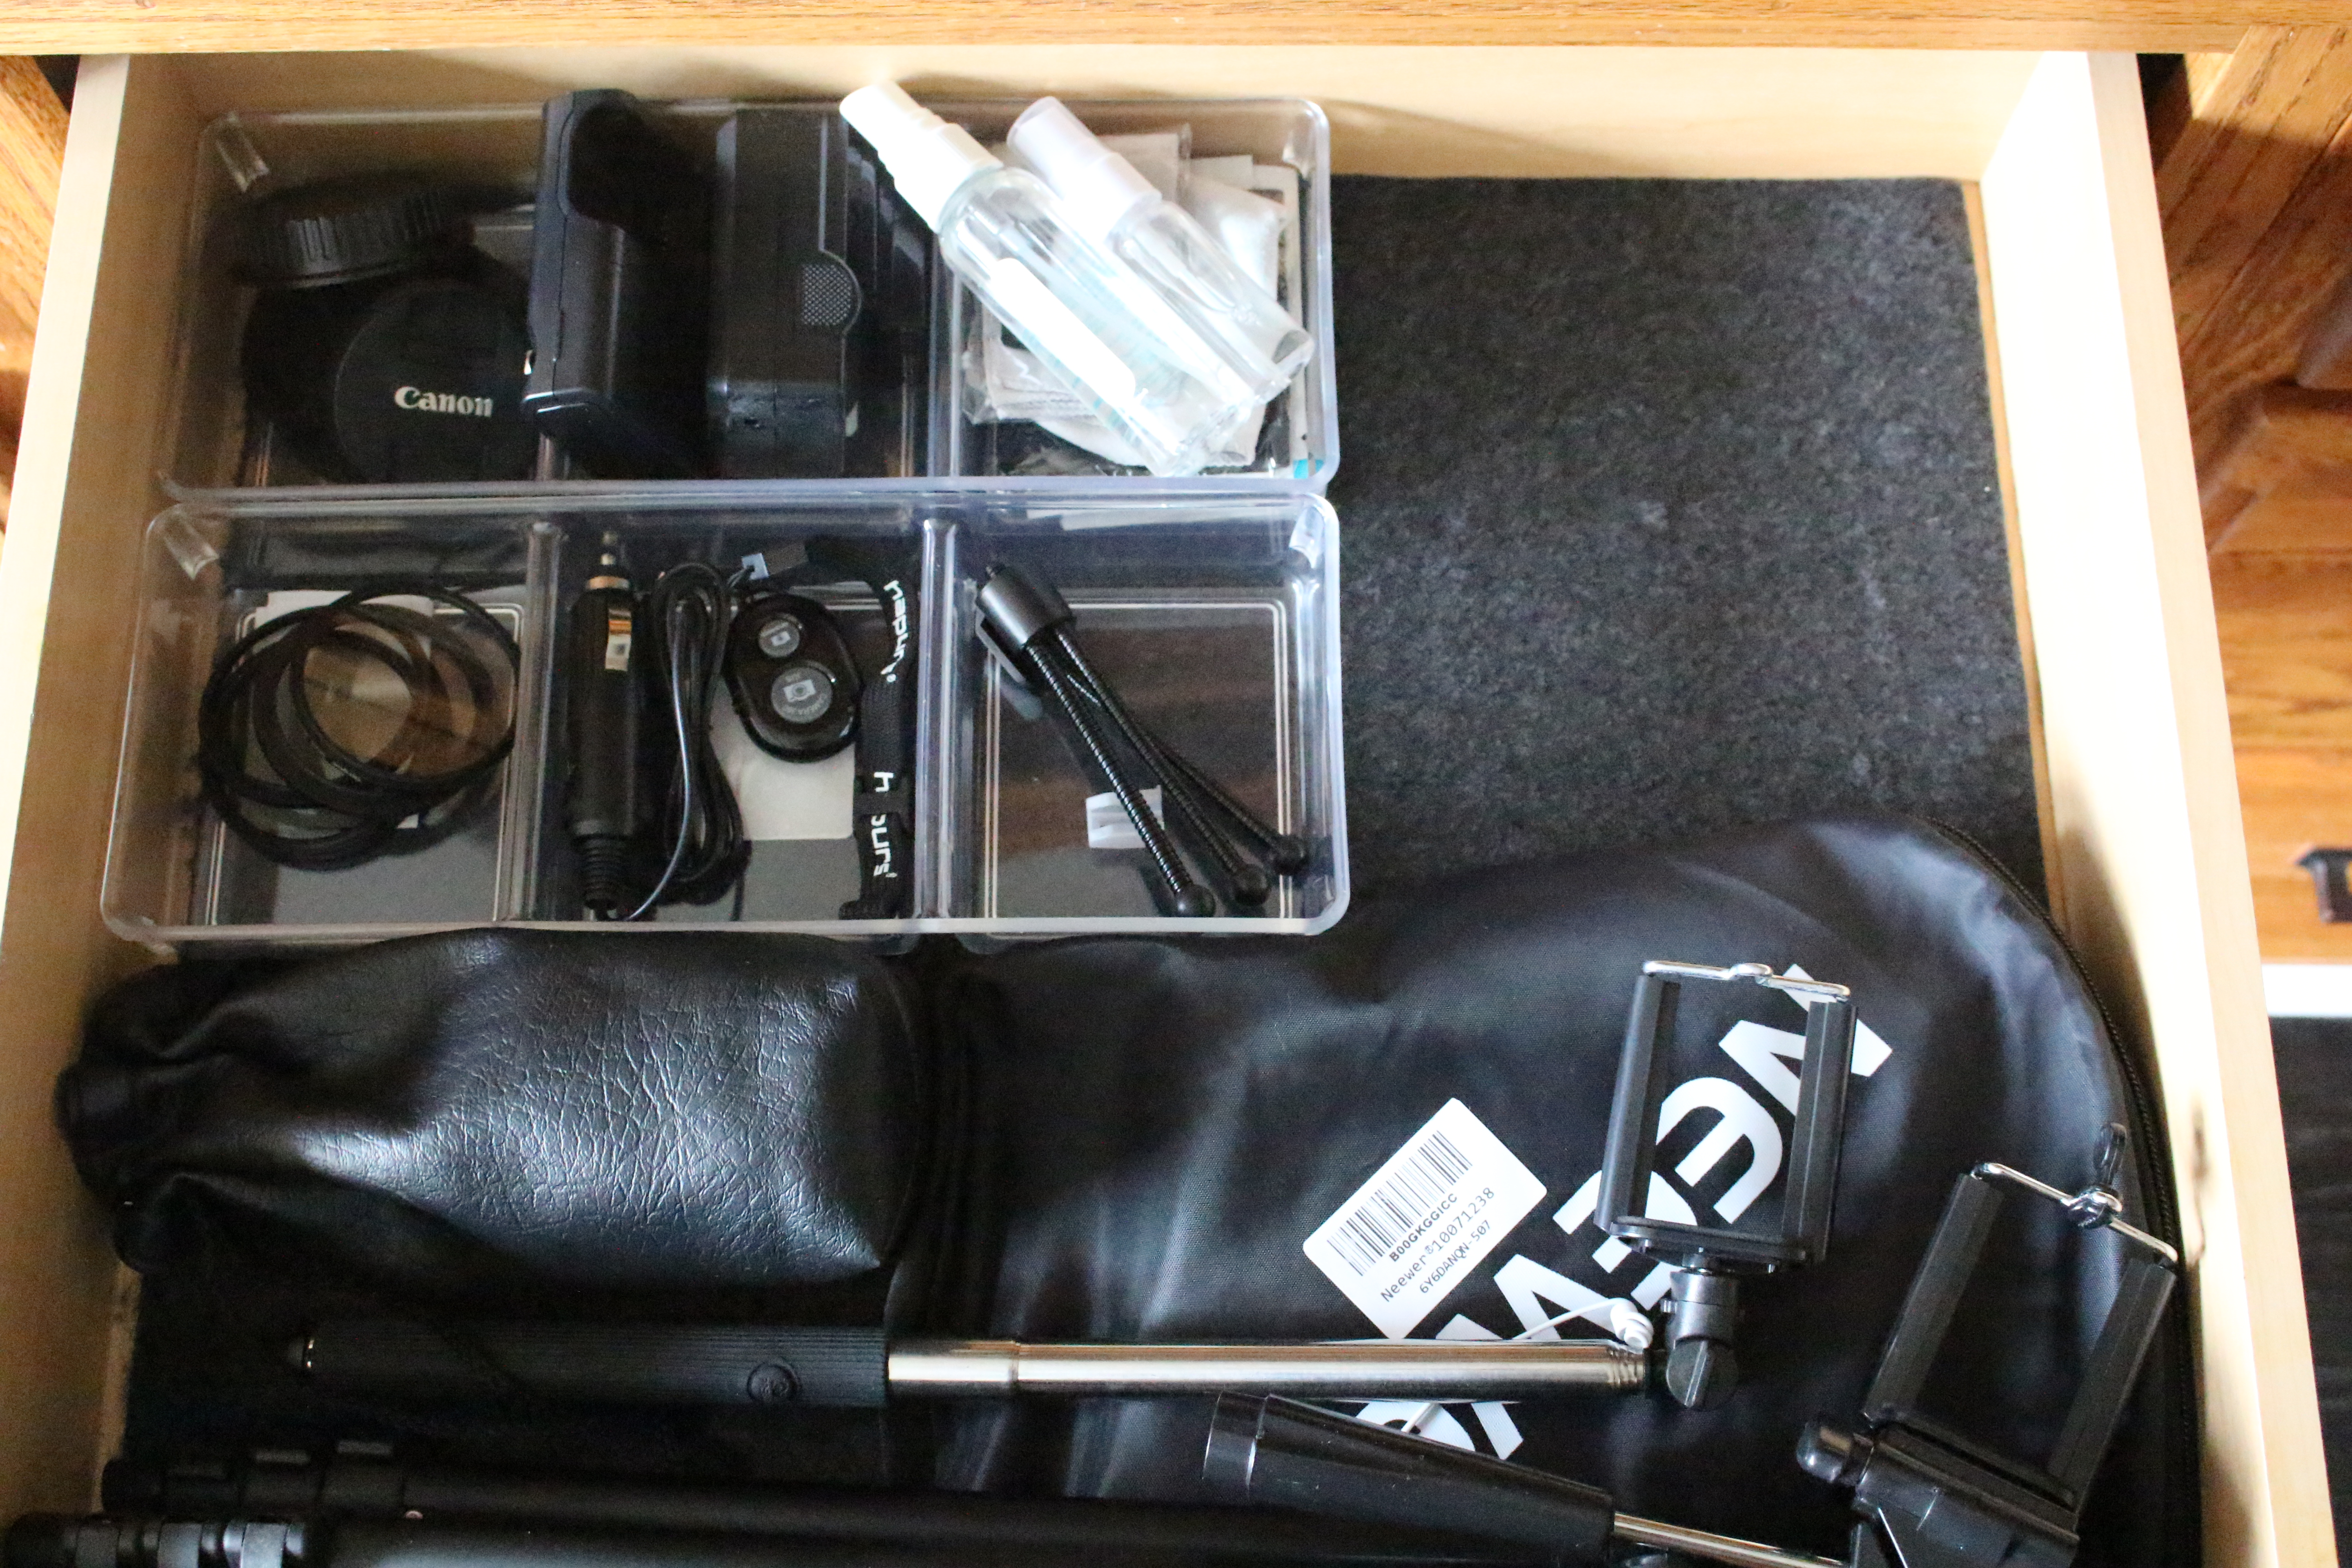 Camera Supply Drawer- drawer liners- organizing camera supplies- camera equipment